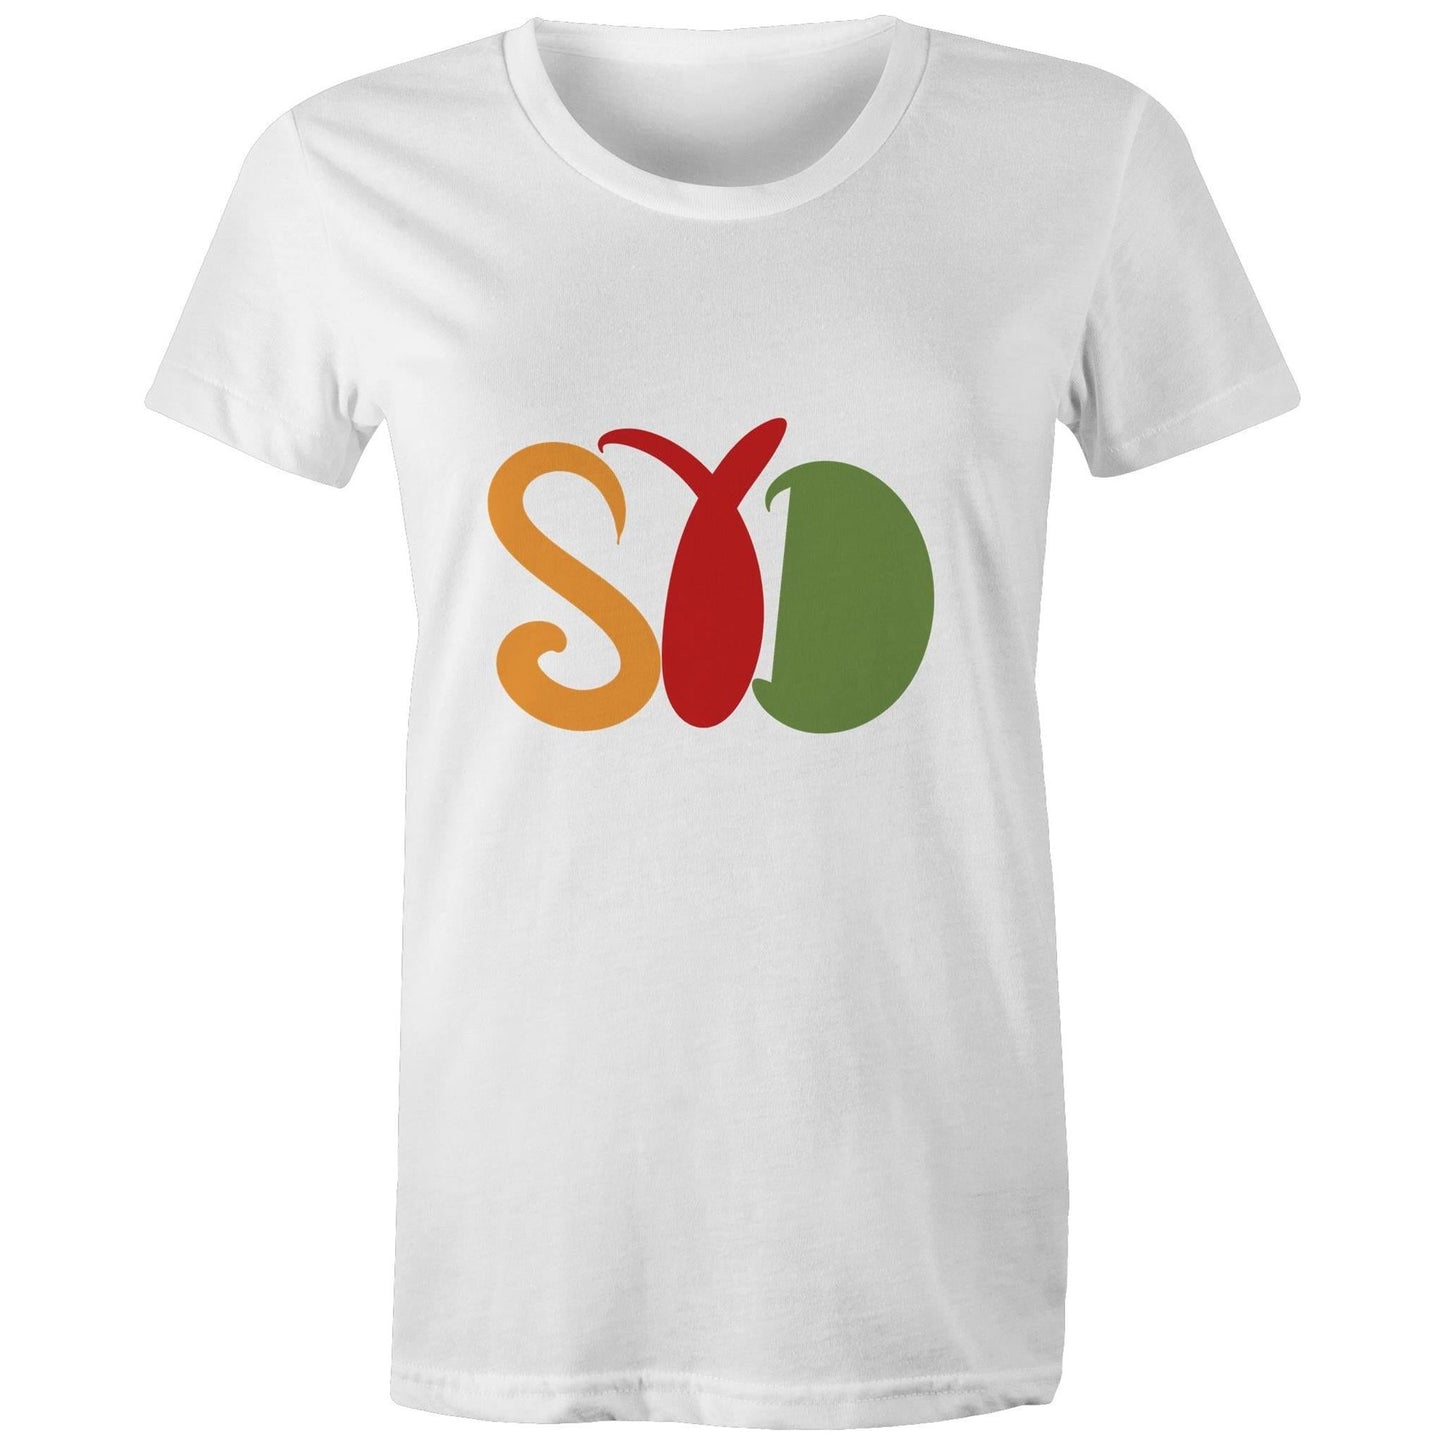 Etiko - Women's Fairtrade Organic Crew T-shirt - Sunny Sydney Australia - Famous Outdoor Gear Store